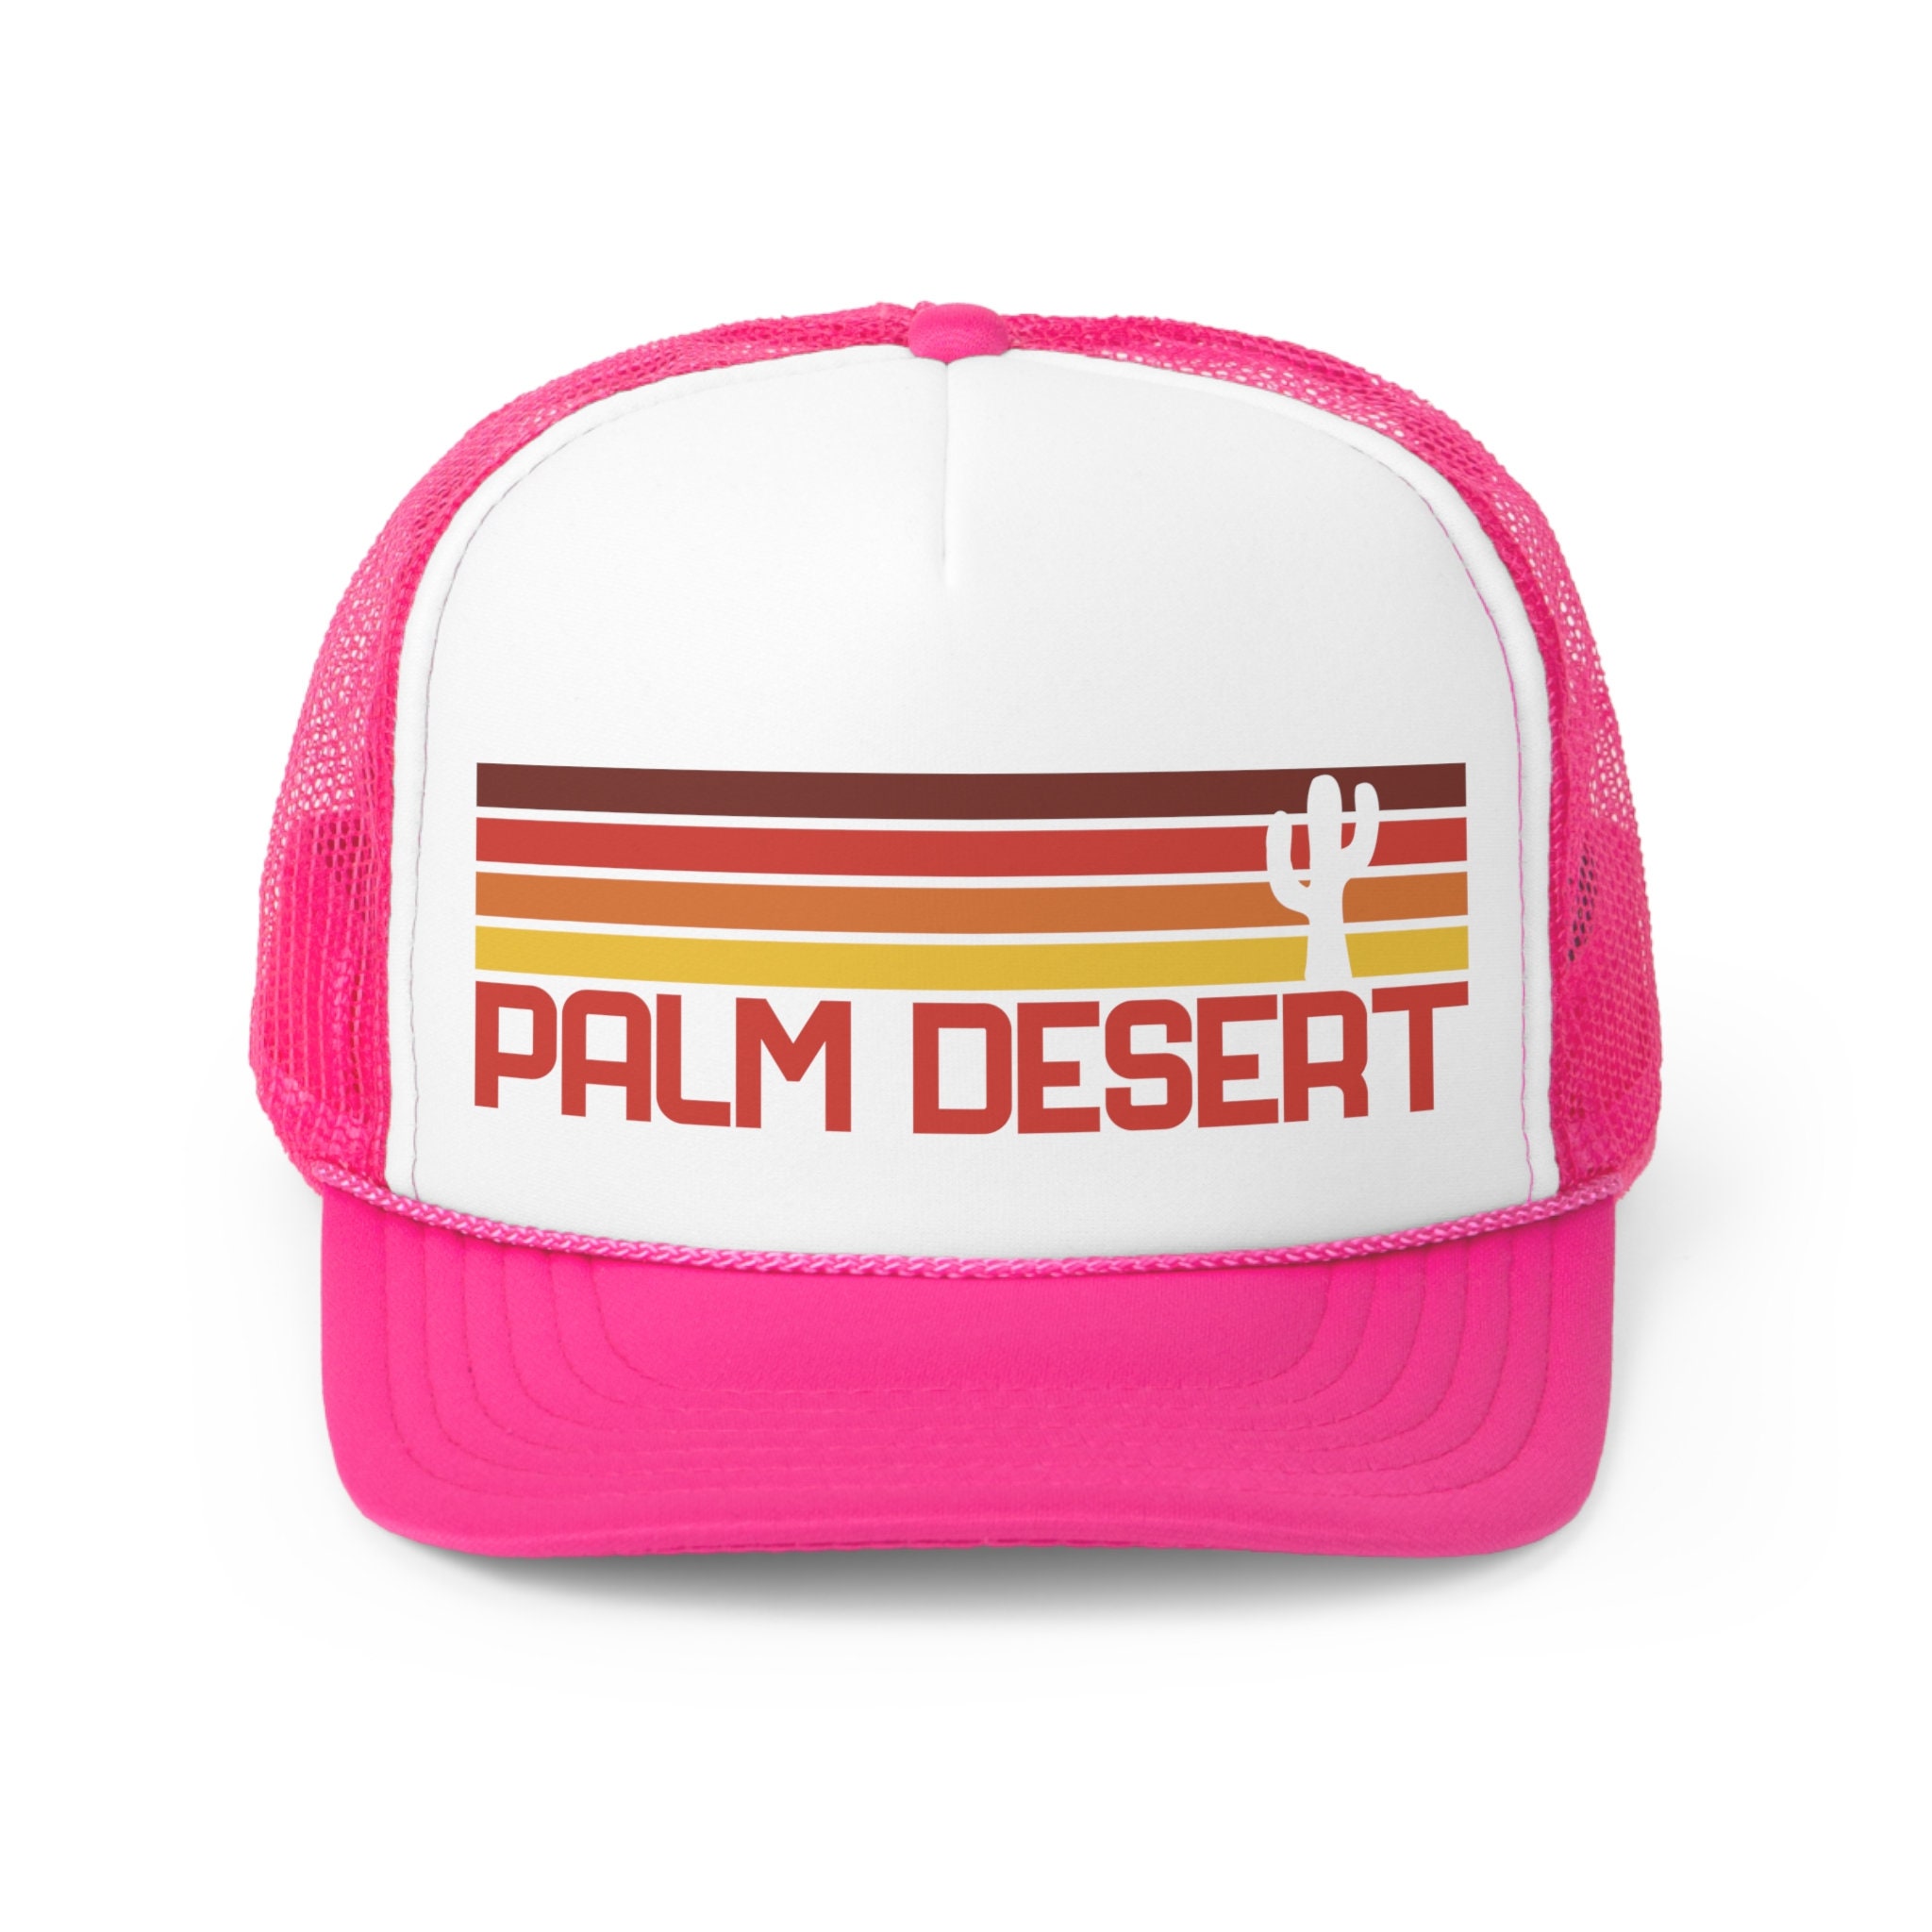 Palm Desert Hat | Palm Desert Trucker Hat Palm Desert Gift Palm Desert Gifts Palm Springs Hat Indio Hat California Hat Palm Desert CA